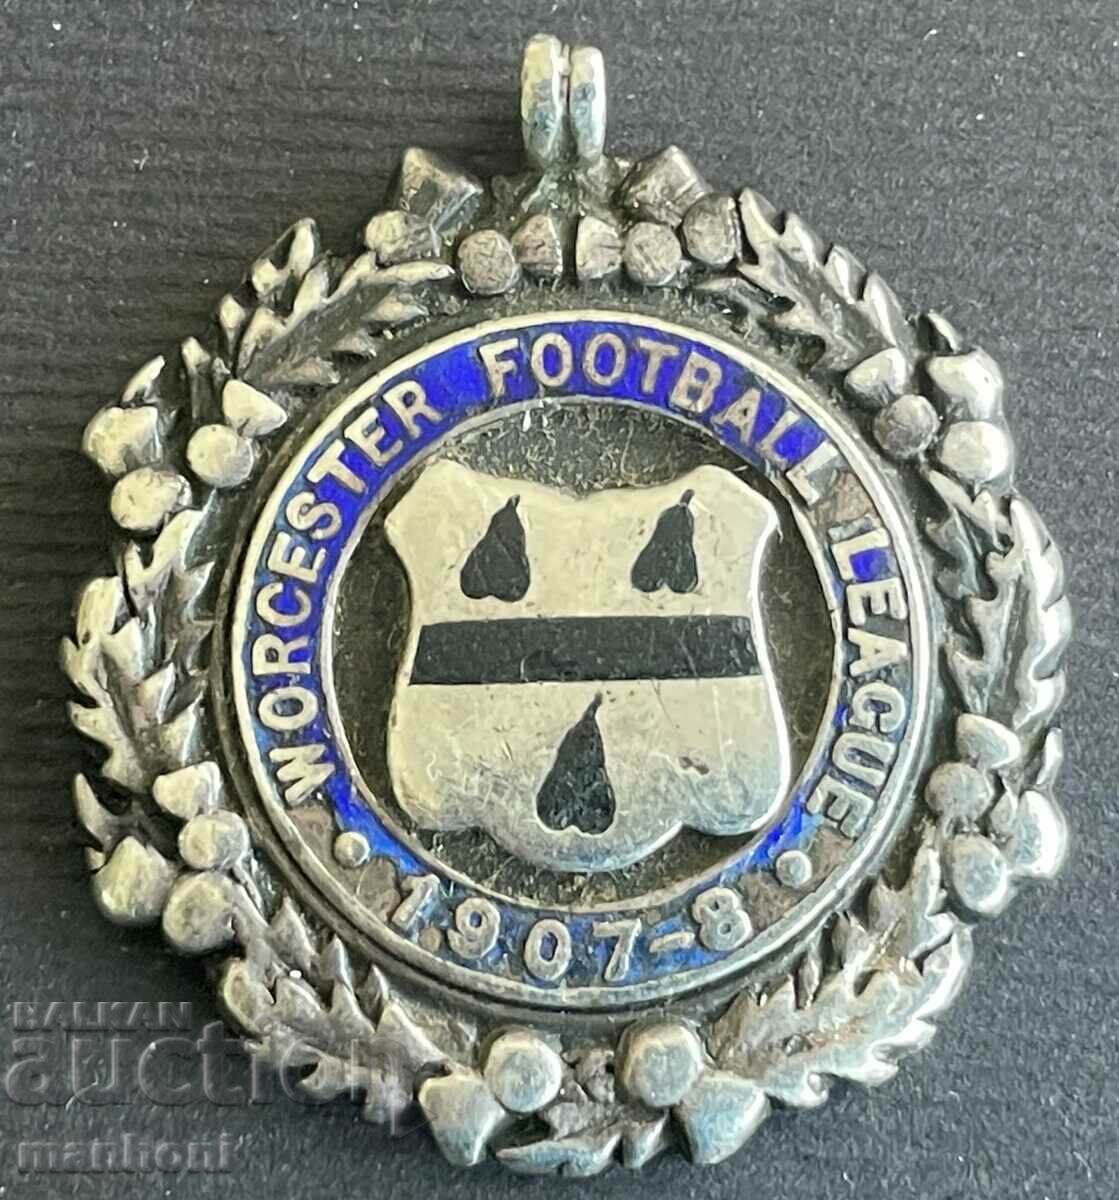 5180 Medalia de fotbal din Anglia Worcester Football League 1907-1908